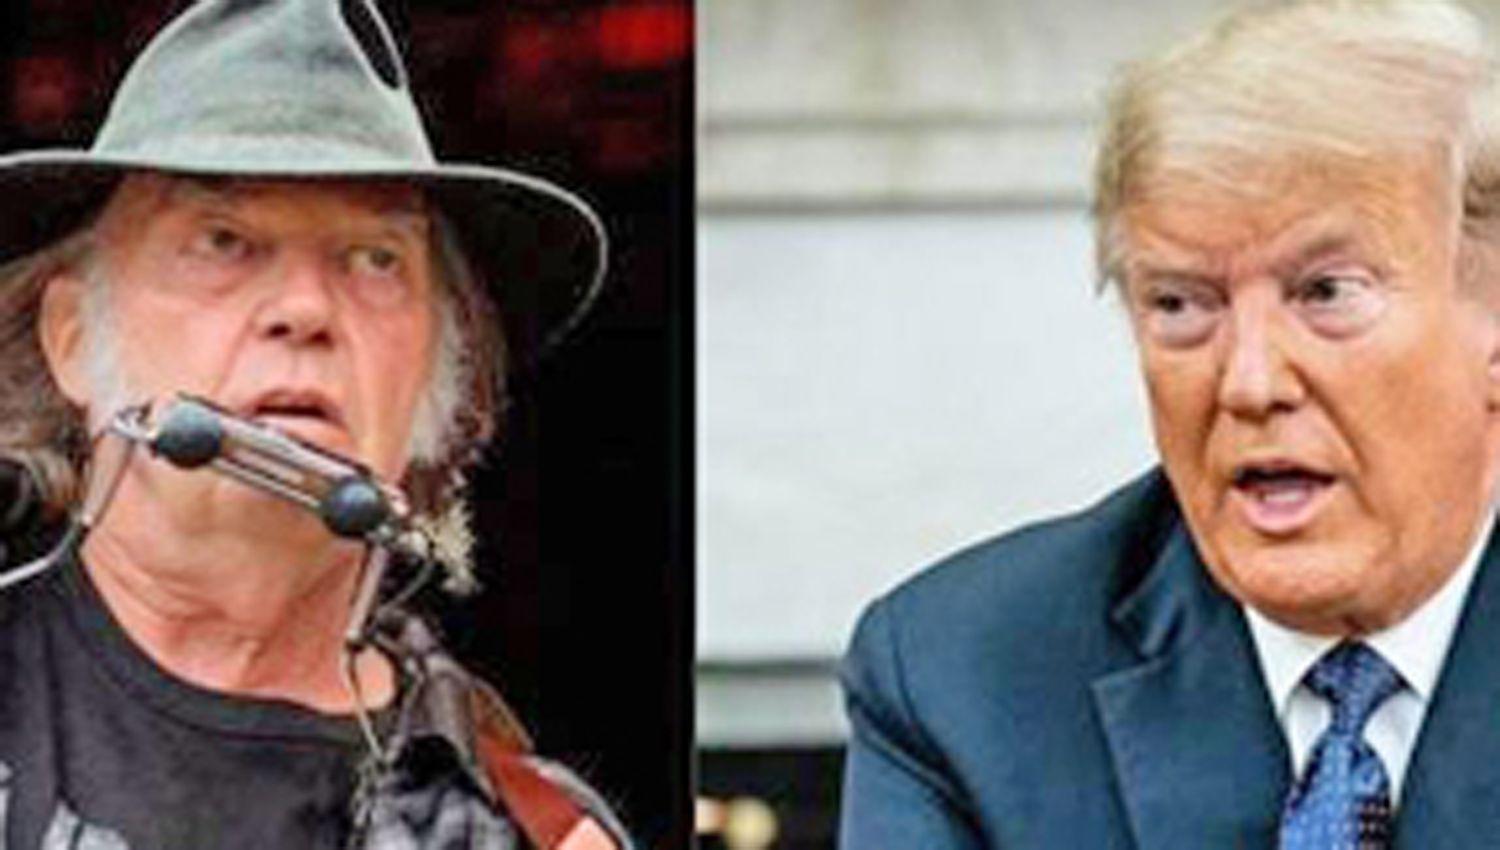 Neil Young querella a Donald Trump por usar sus canciones en un mitin